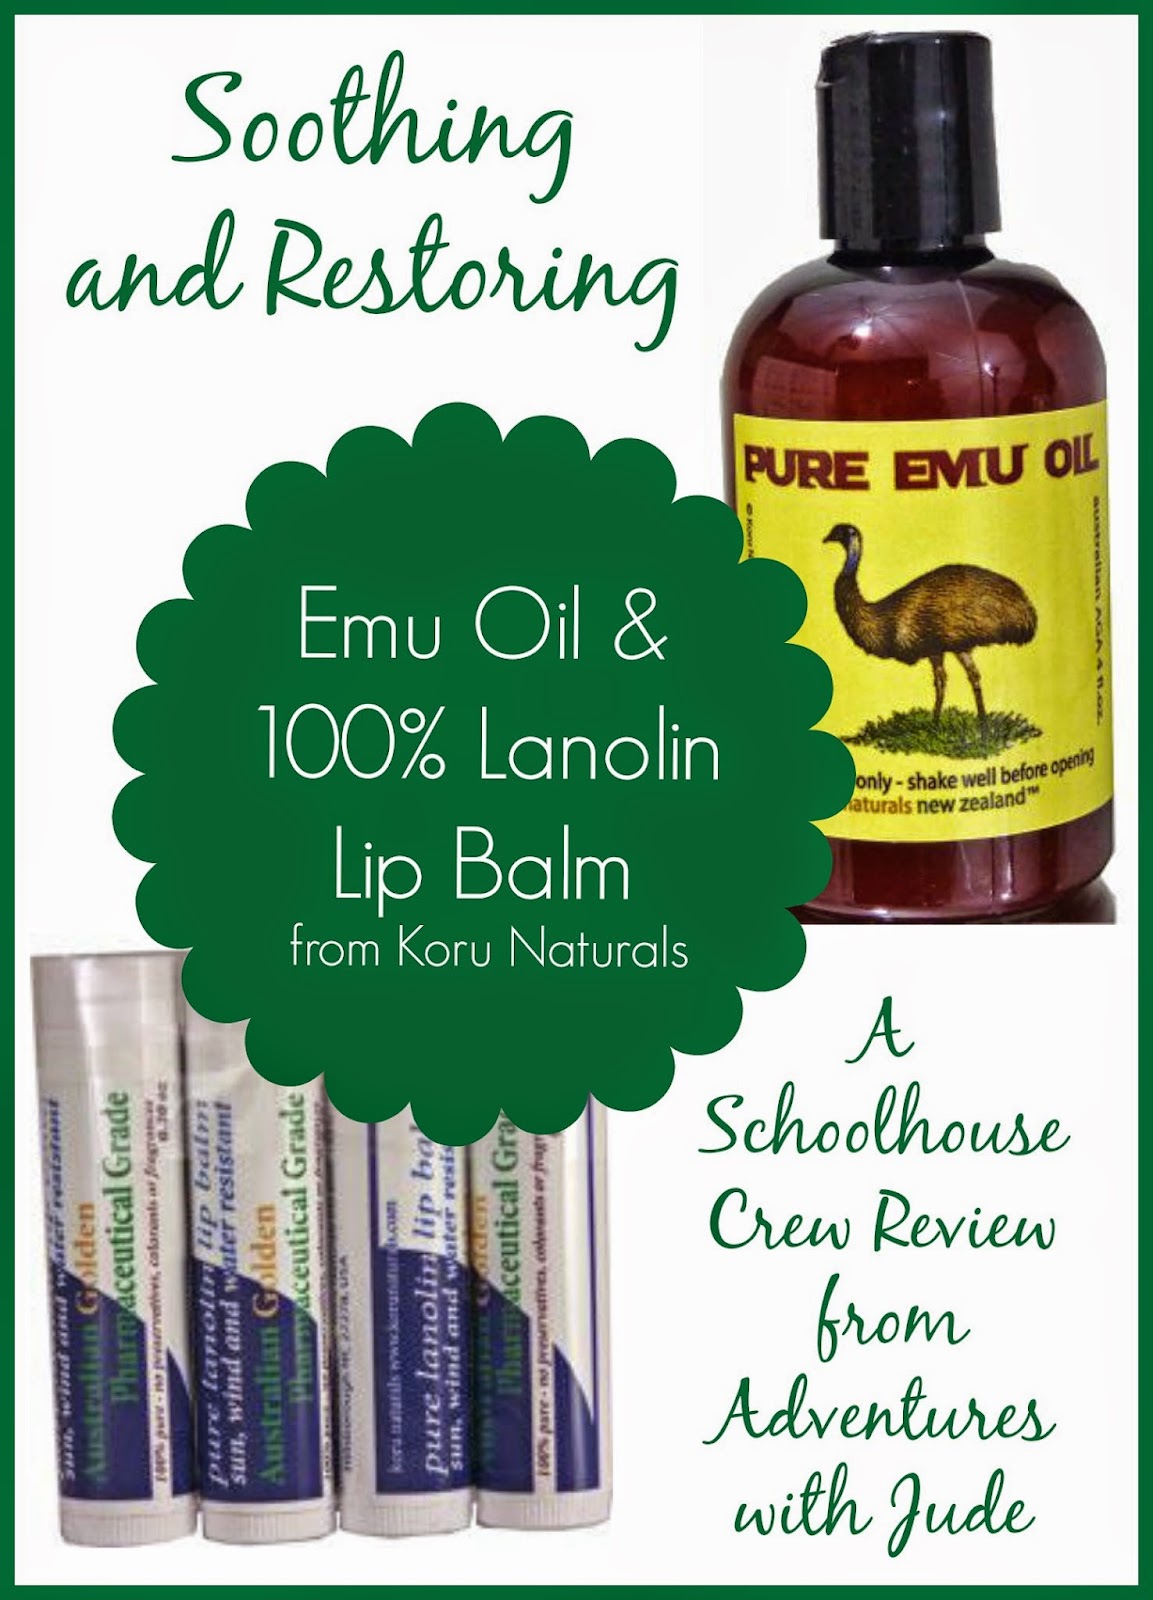 Koru Naturals emu oil and lanolin lip balm